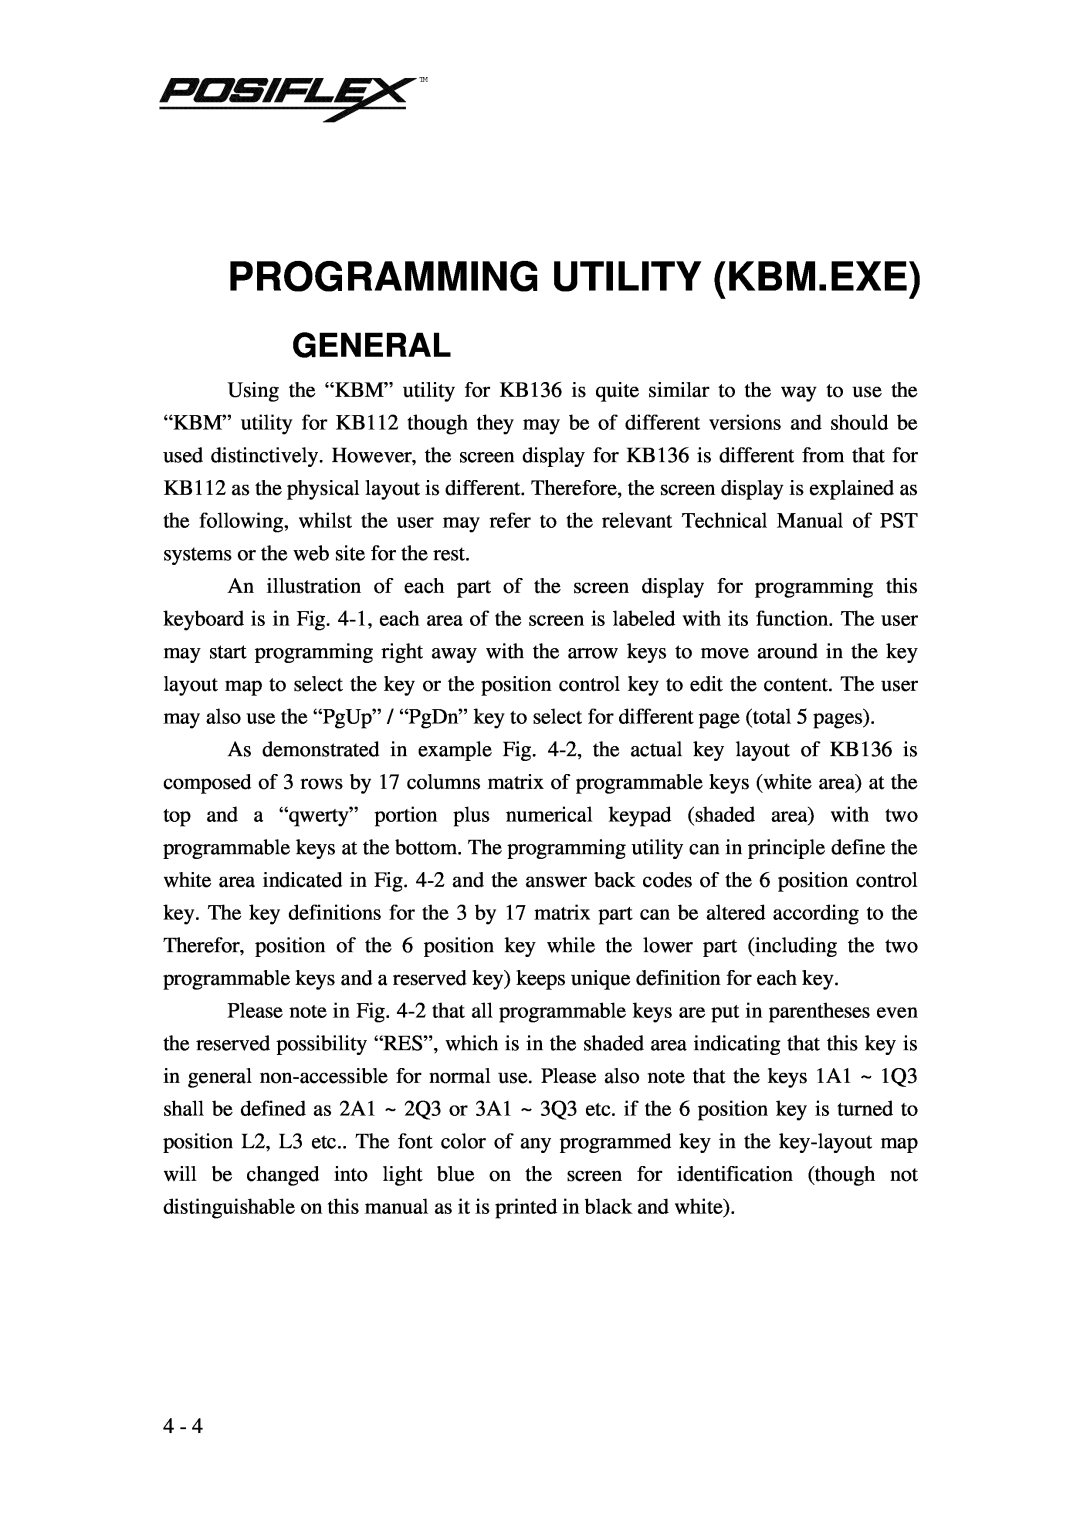 POSIFLEX Business Machines PST KB136 manual Programming Utility Kbm.Exe, General 